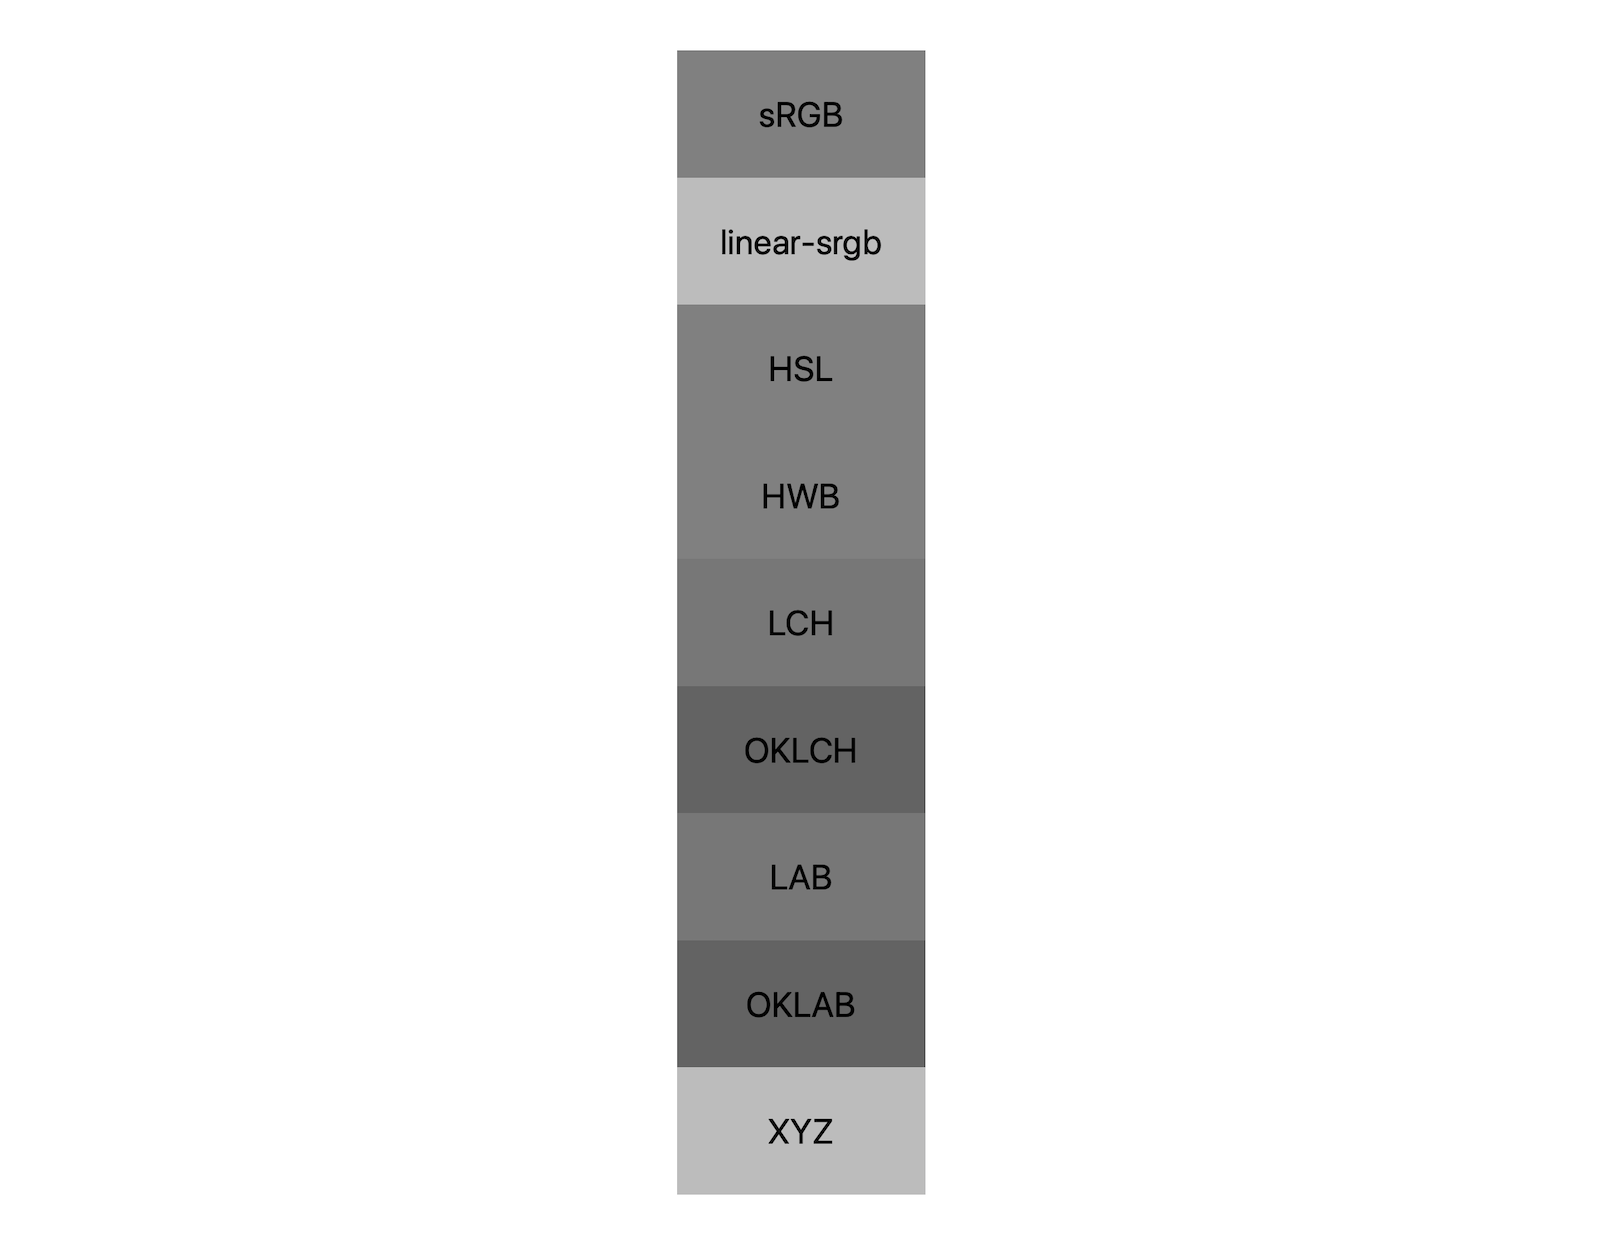 7 ruang warna (sRGB, linear-sRGB, lch, oklch, lab, oklab, xyz) masing-masing menunjukkan hasil pencampuran hitam dan putih. Kira-kira 5 nuansa berbeda ditampilkan, menunjukkan bahwa setiap ruang warna akan bercampur menjadi abu-abu dengan cara yang berbeda.